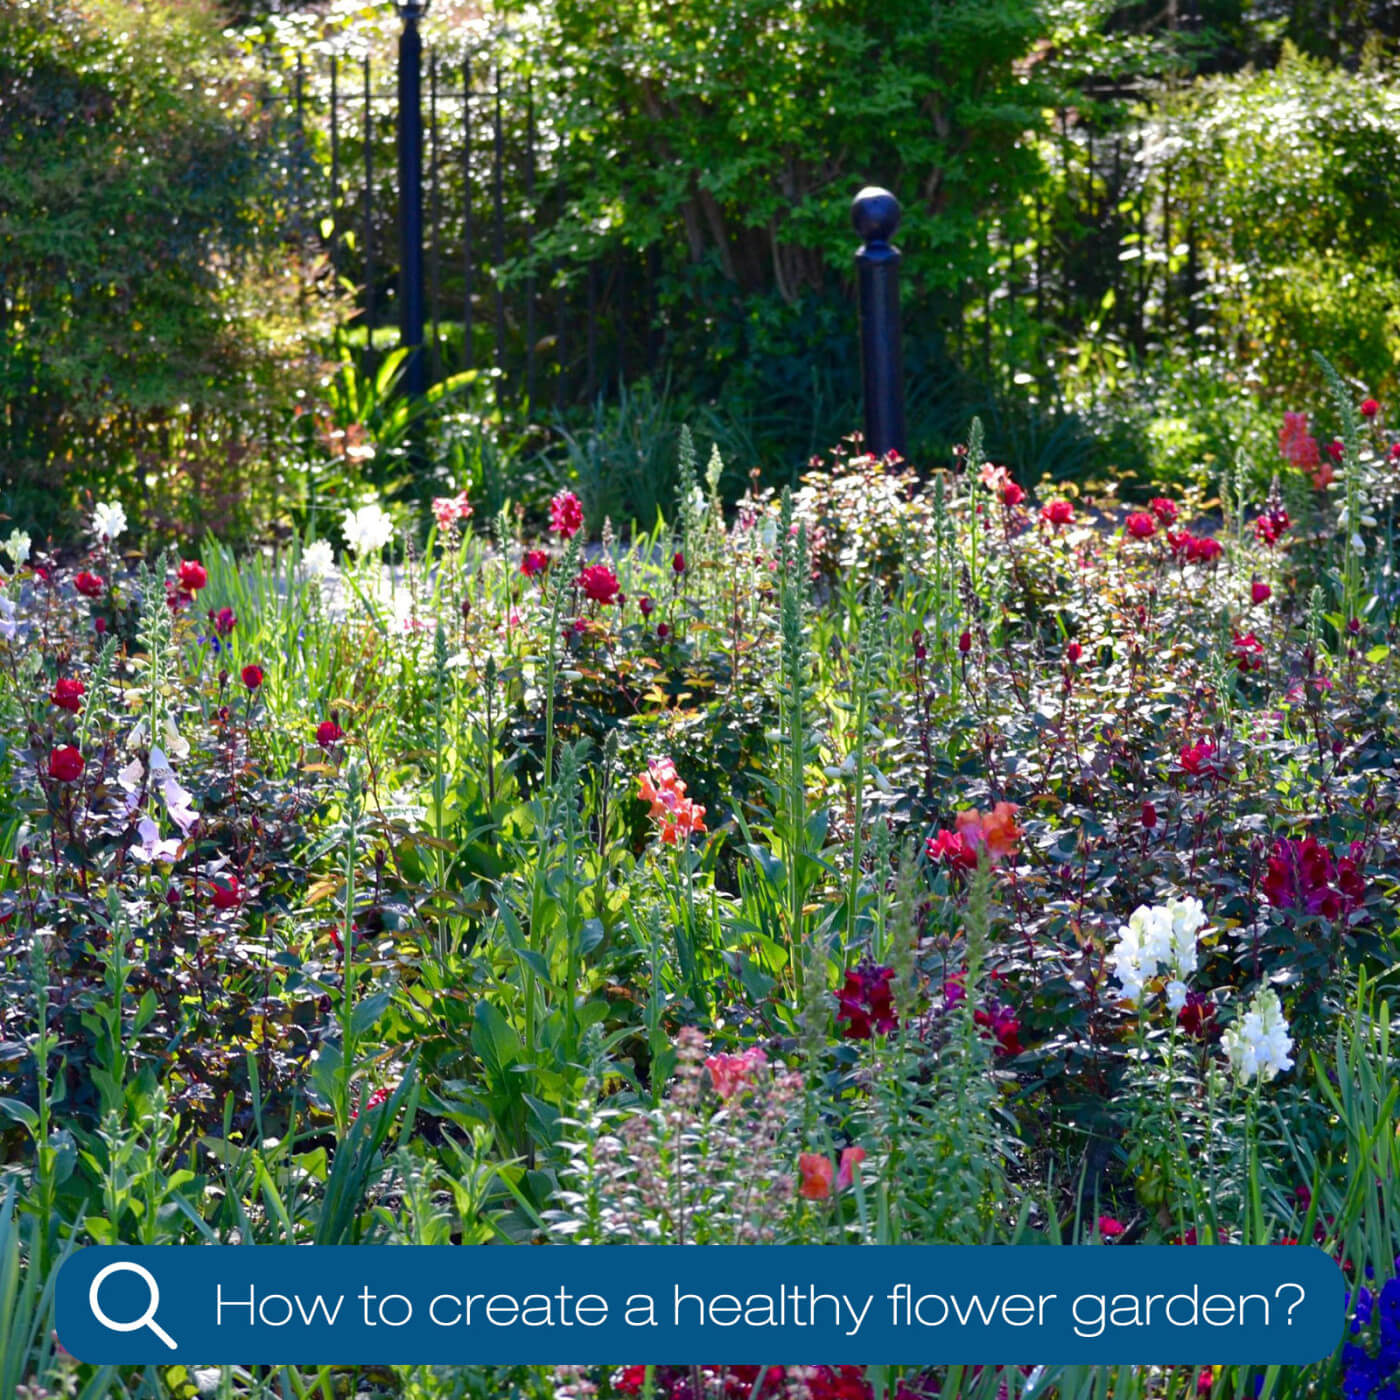 Create a Chelsea Flower Show, gold medal-worthy garden!